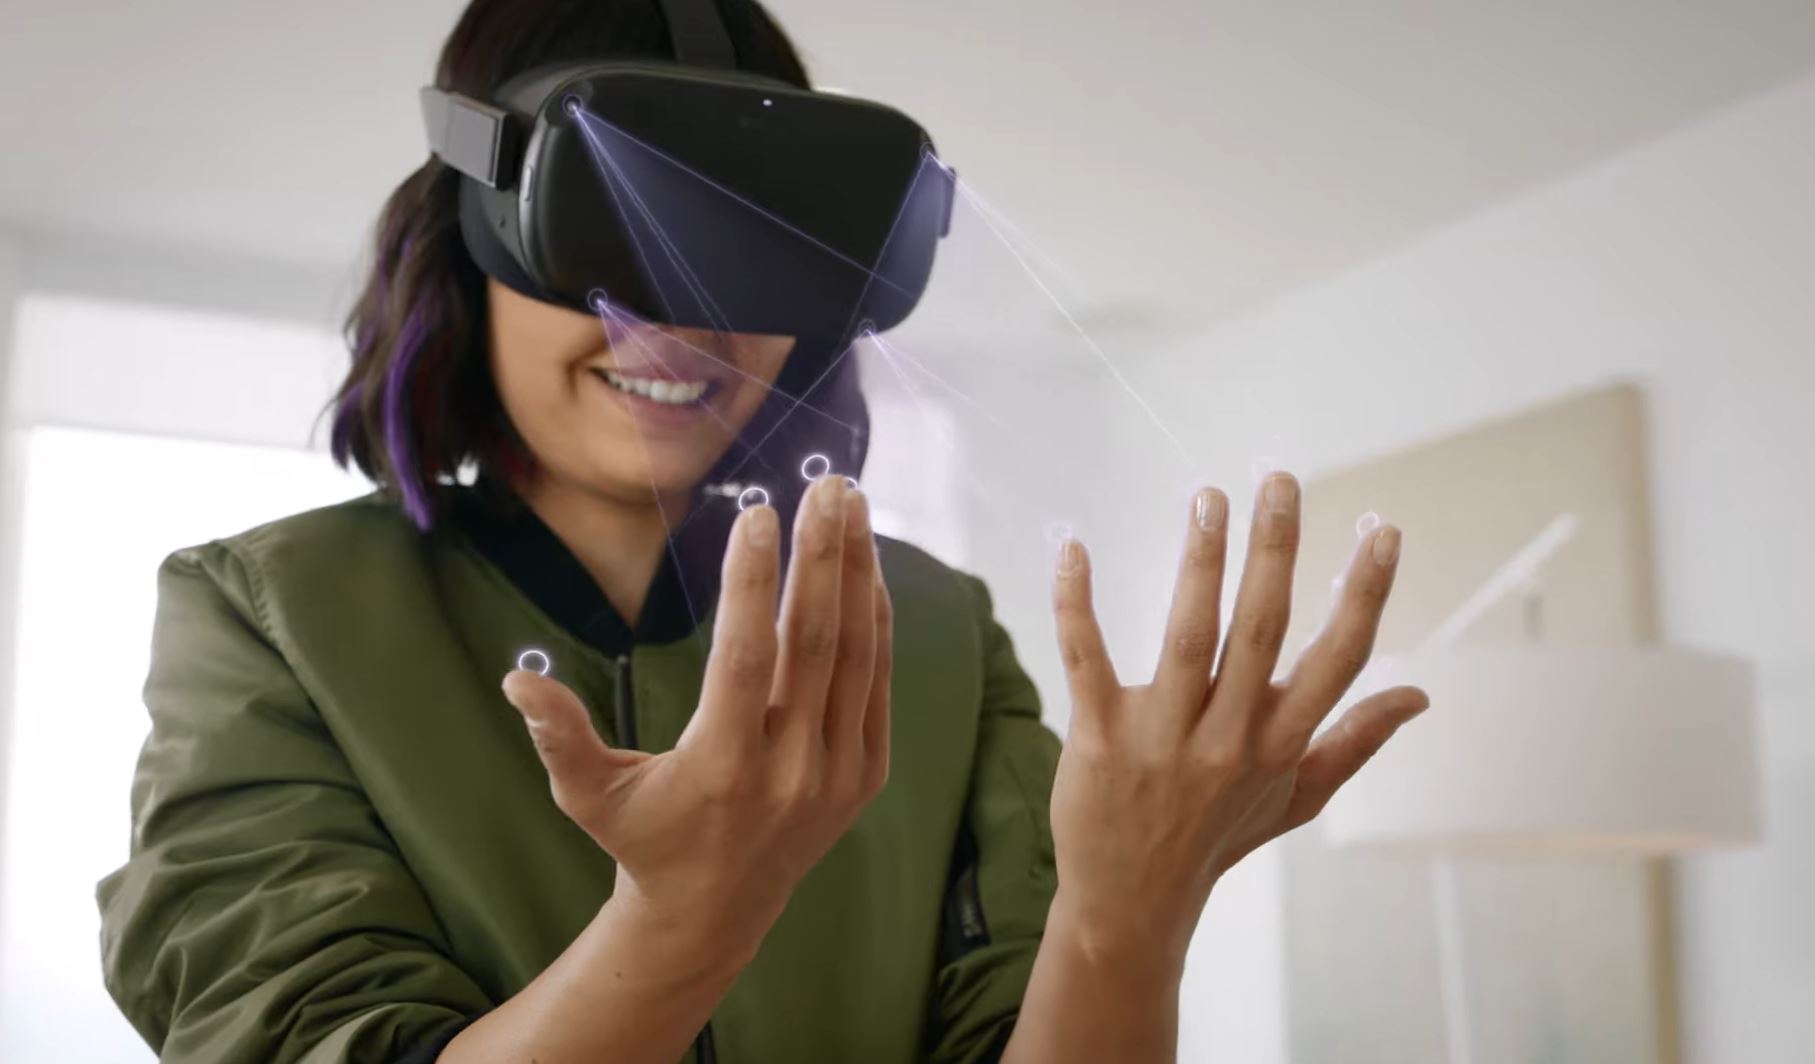 oculus rift s hand tracking